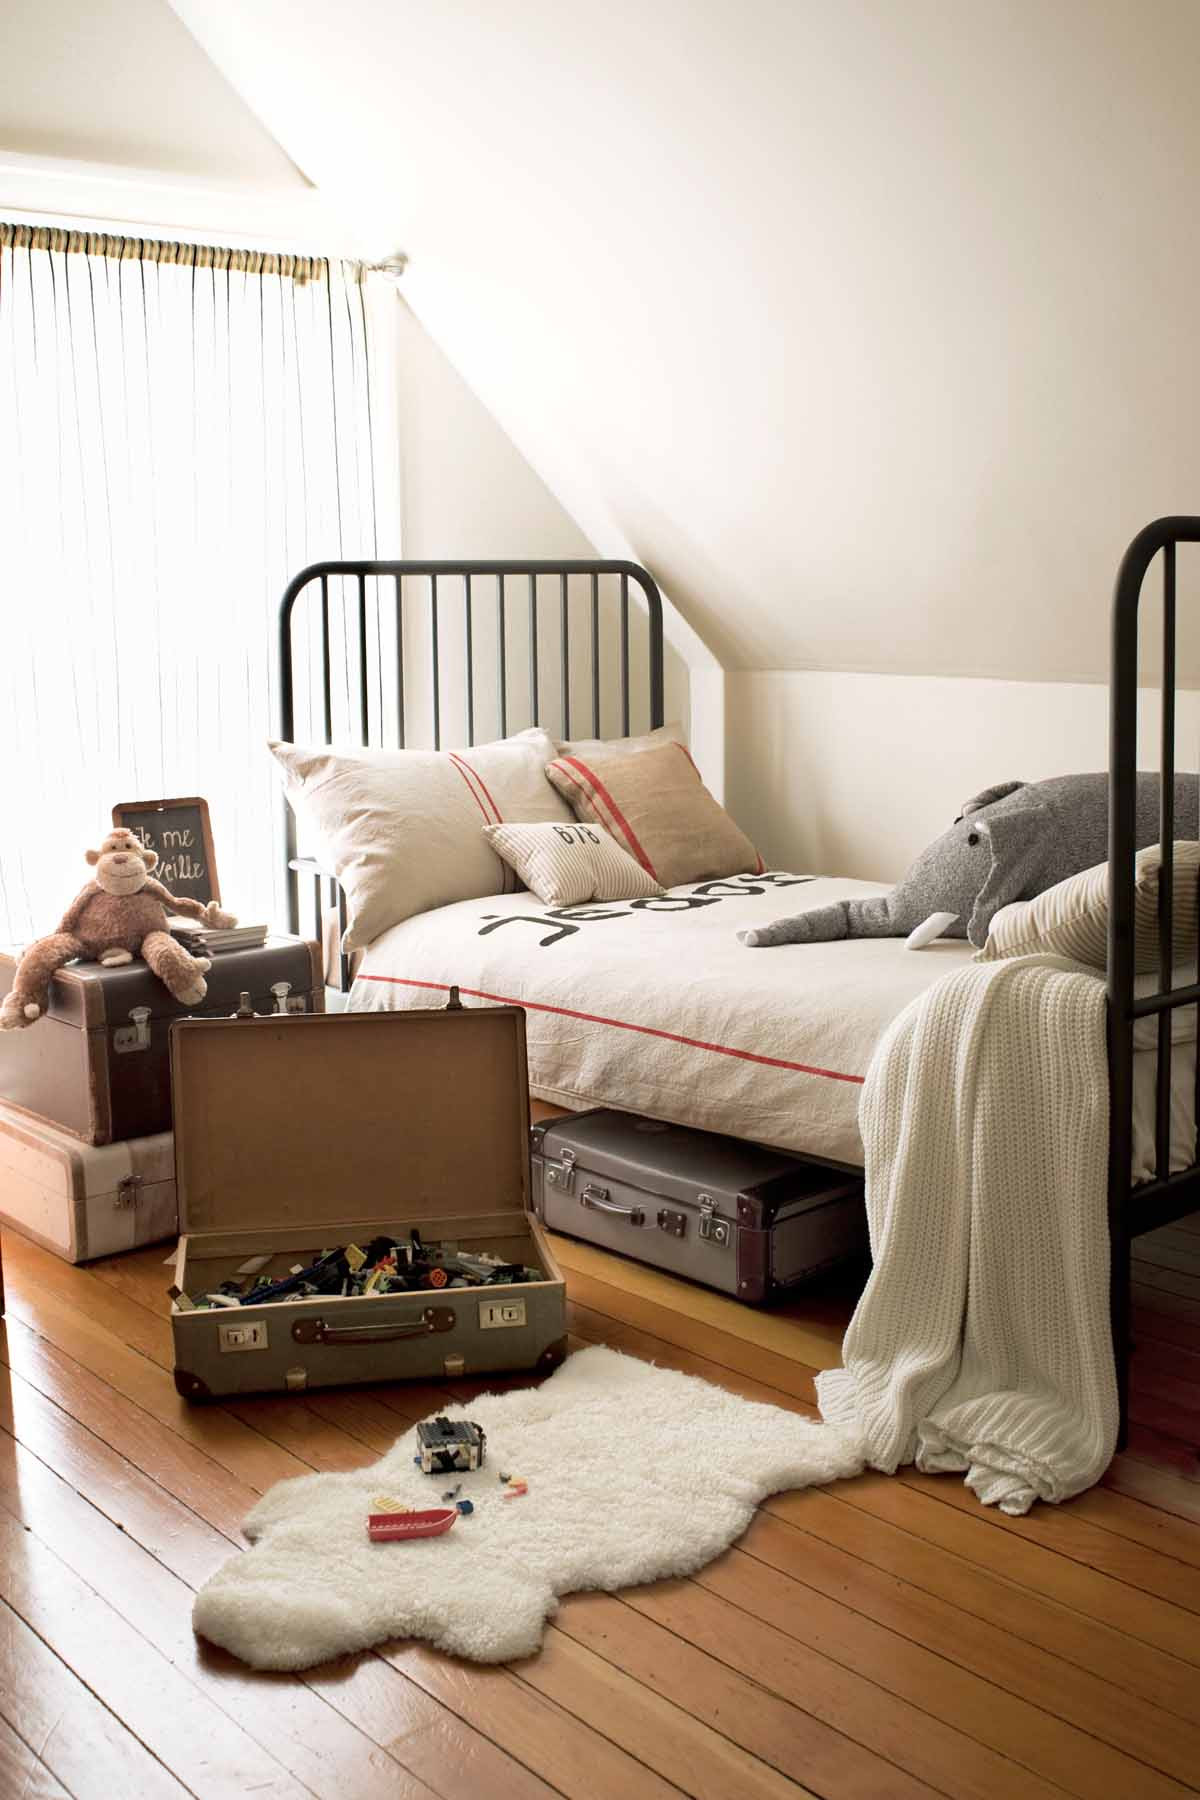 Boys Bedroom Themes
 14 Best Boys Bedroom Ideas Room Decor and Themes for a